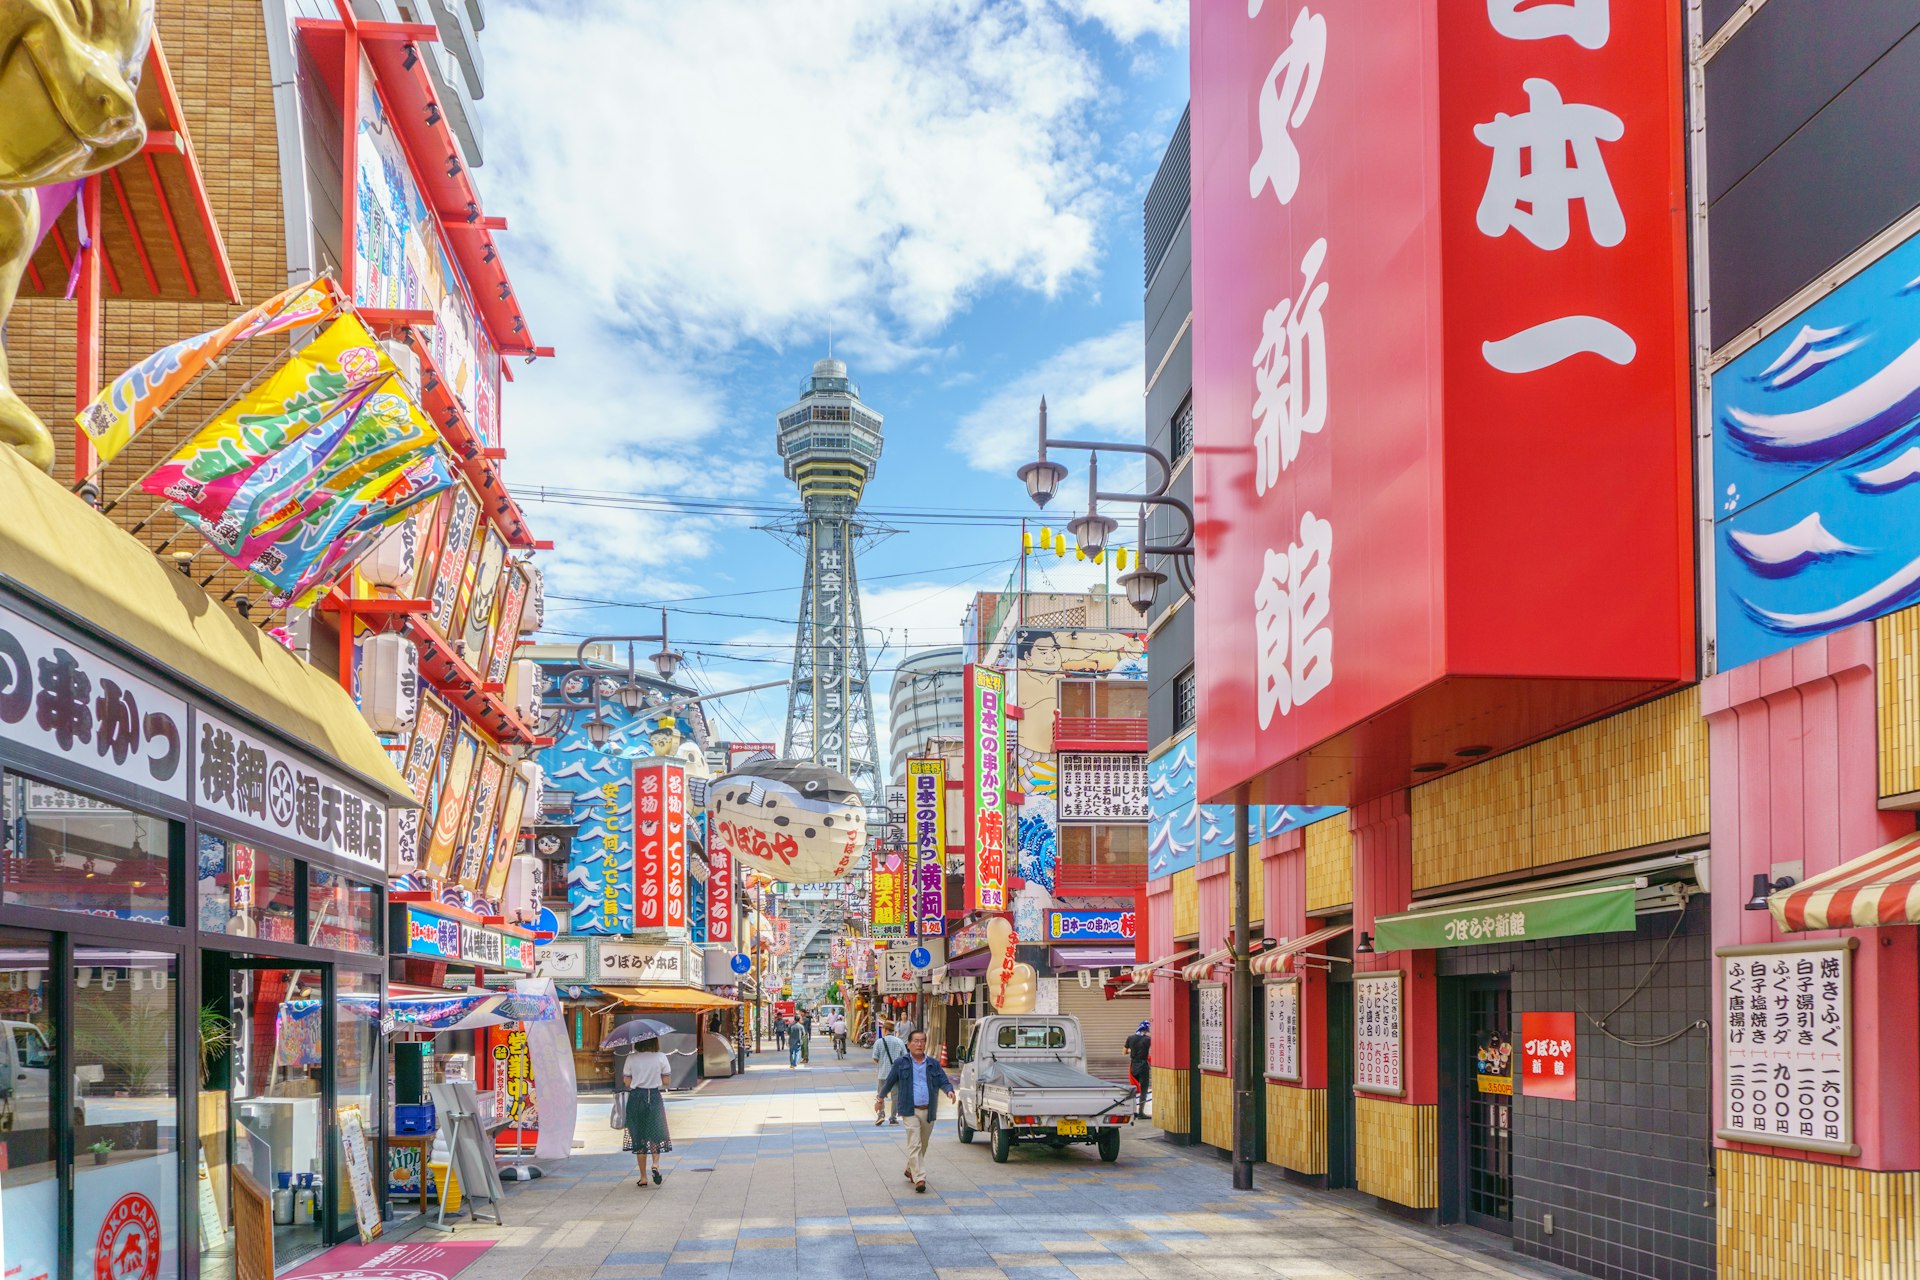 An Osaka street scene with the Tsūtenkaku Tower in the background